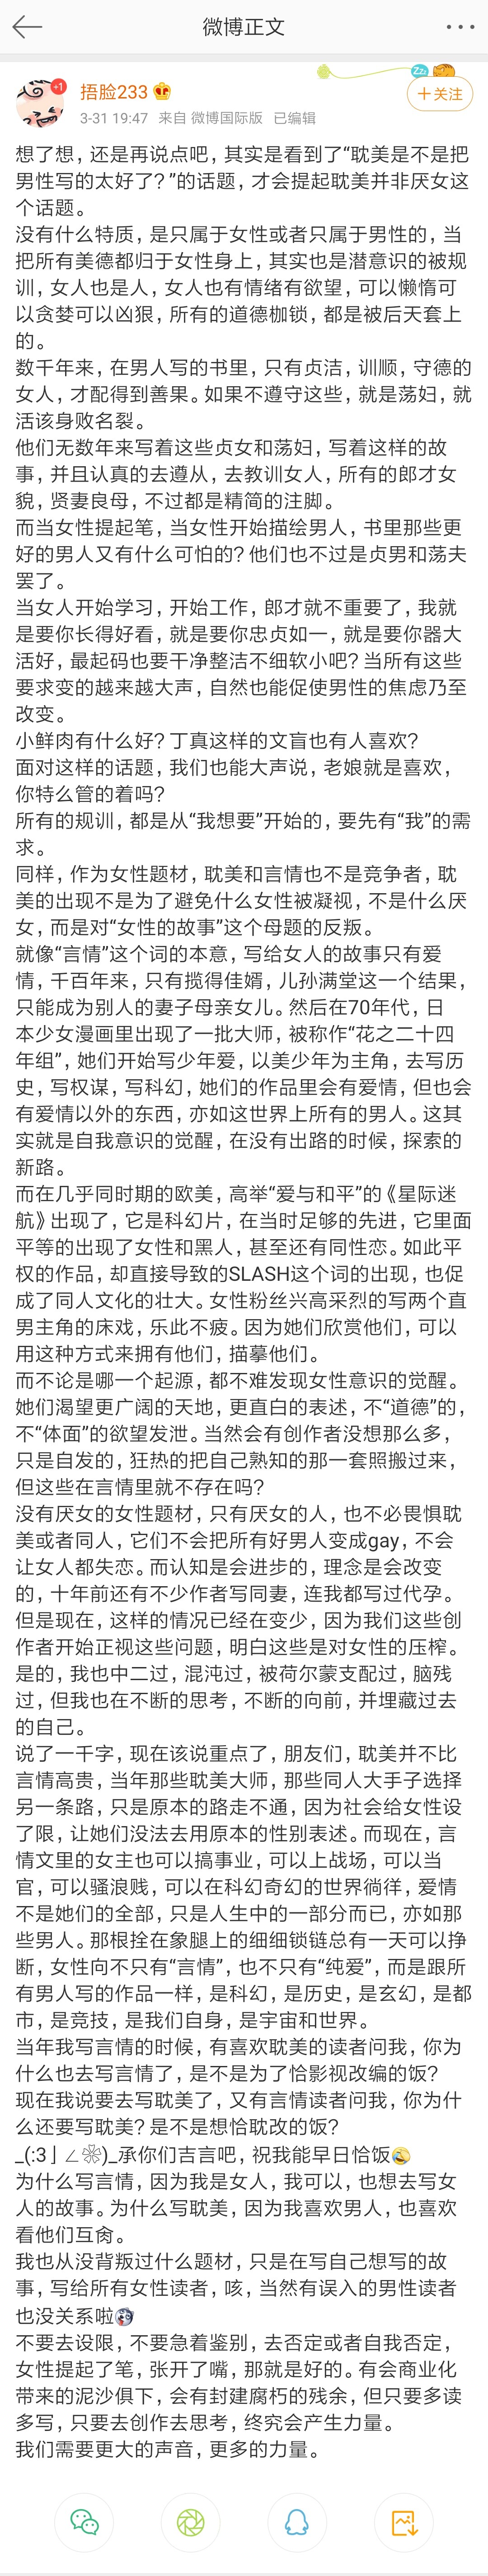 Screenshot 2021 09 26 21 54 39 288 com.sina.weibo